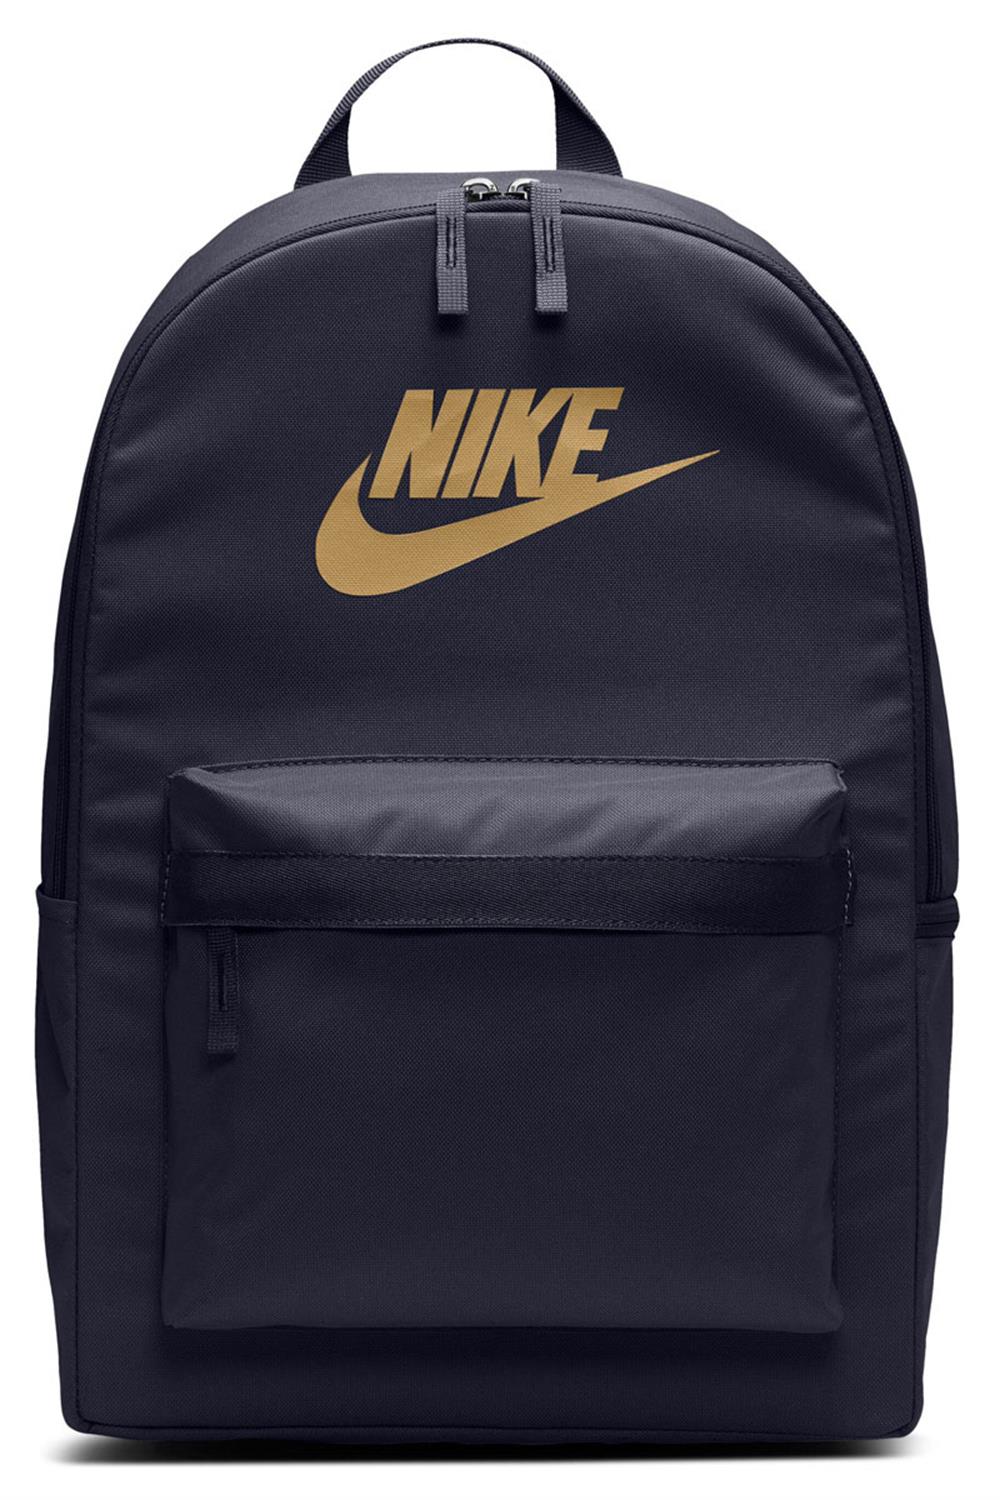 kapitalisme afgunst gastheer Nike Heritage 2.0 backpack BA5879-452